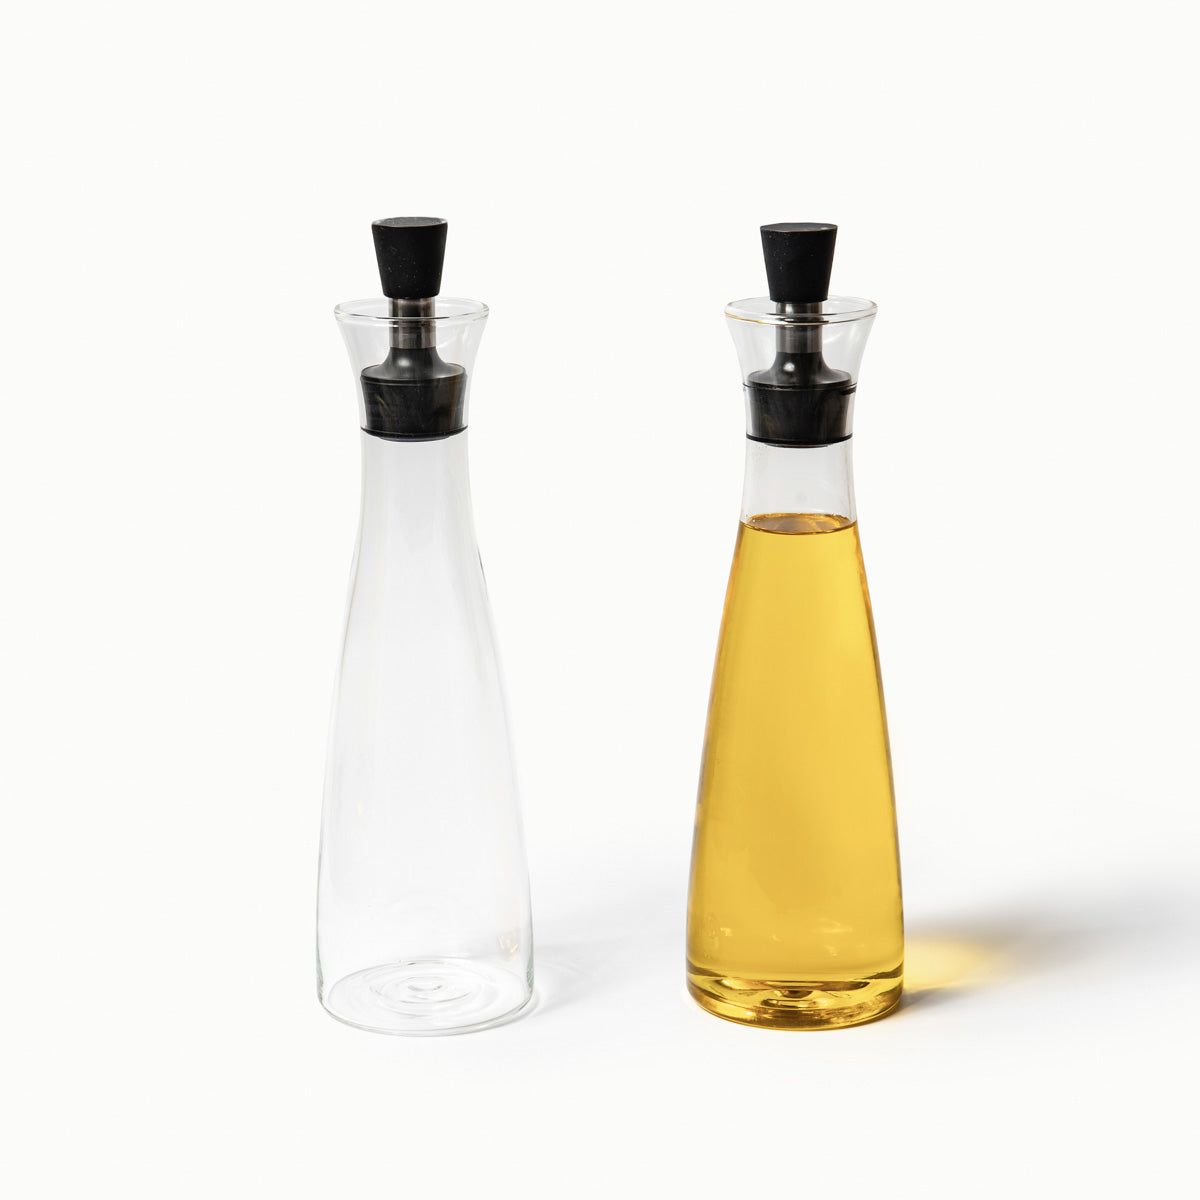 Tall Condiment Glass Bottle